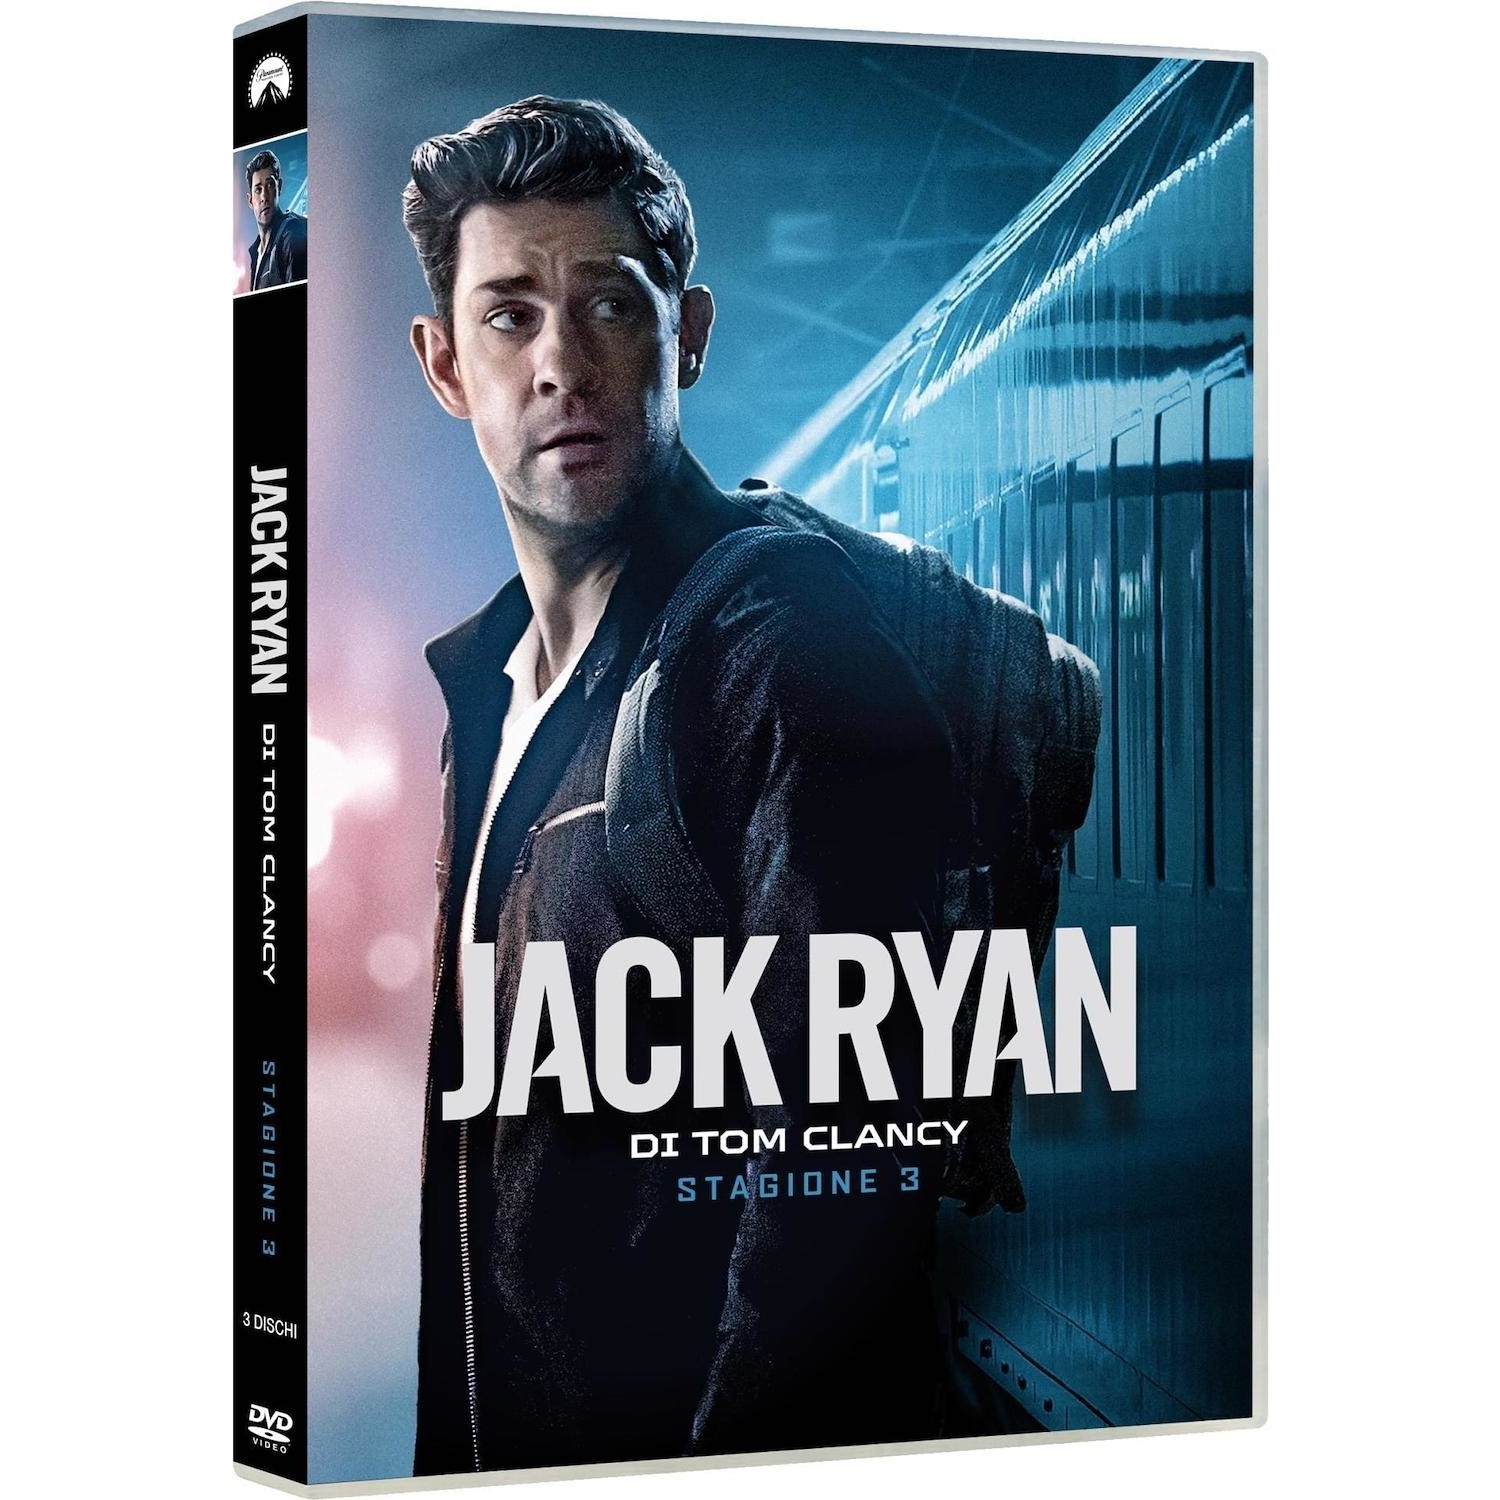 Immagine per Serie TV DVD Jack Ryan Stagione 3 da DIMOStore